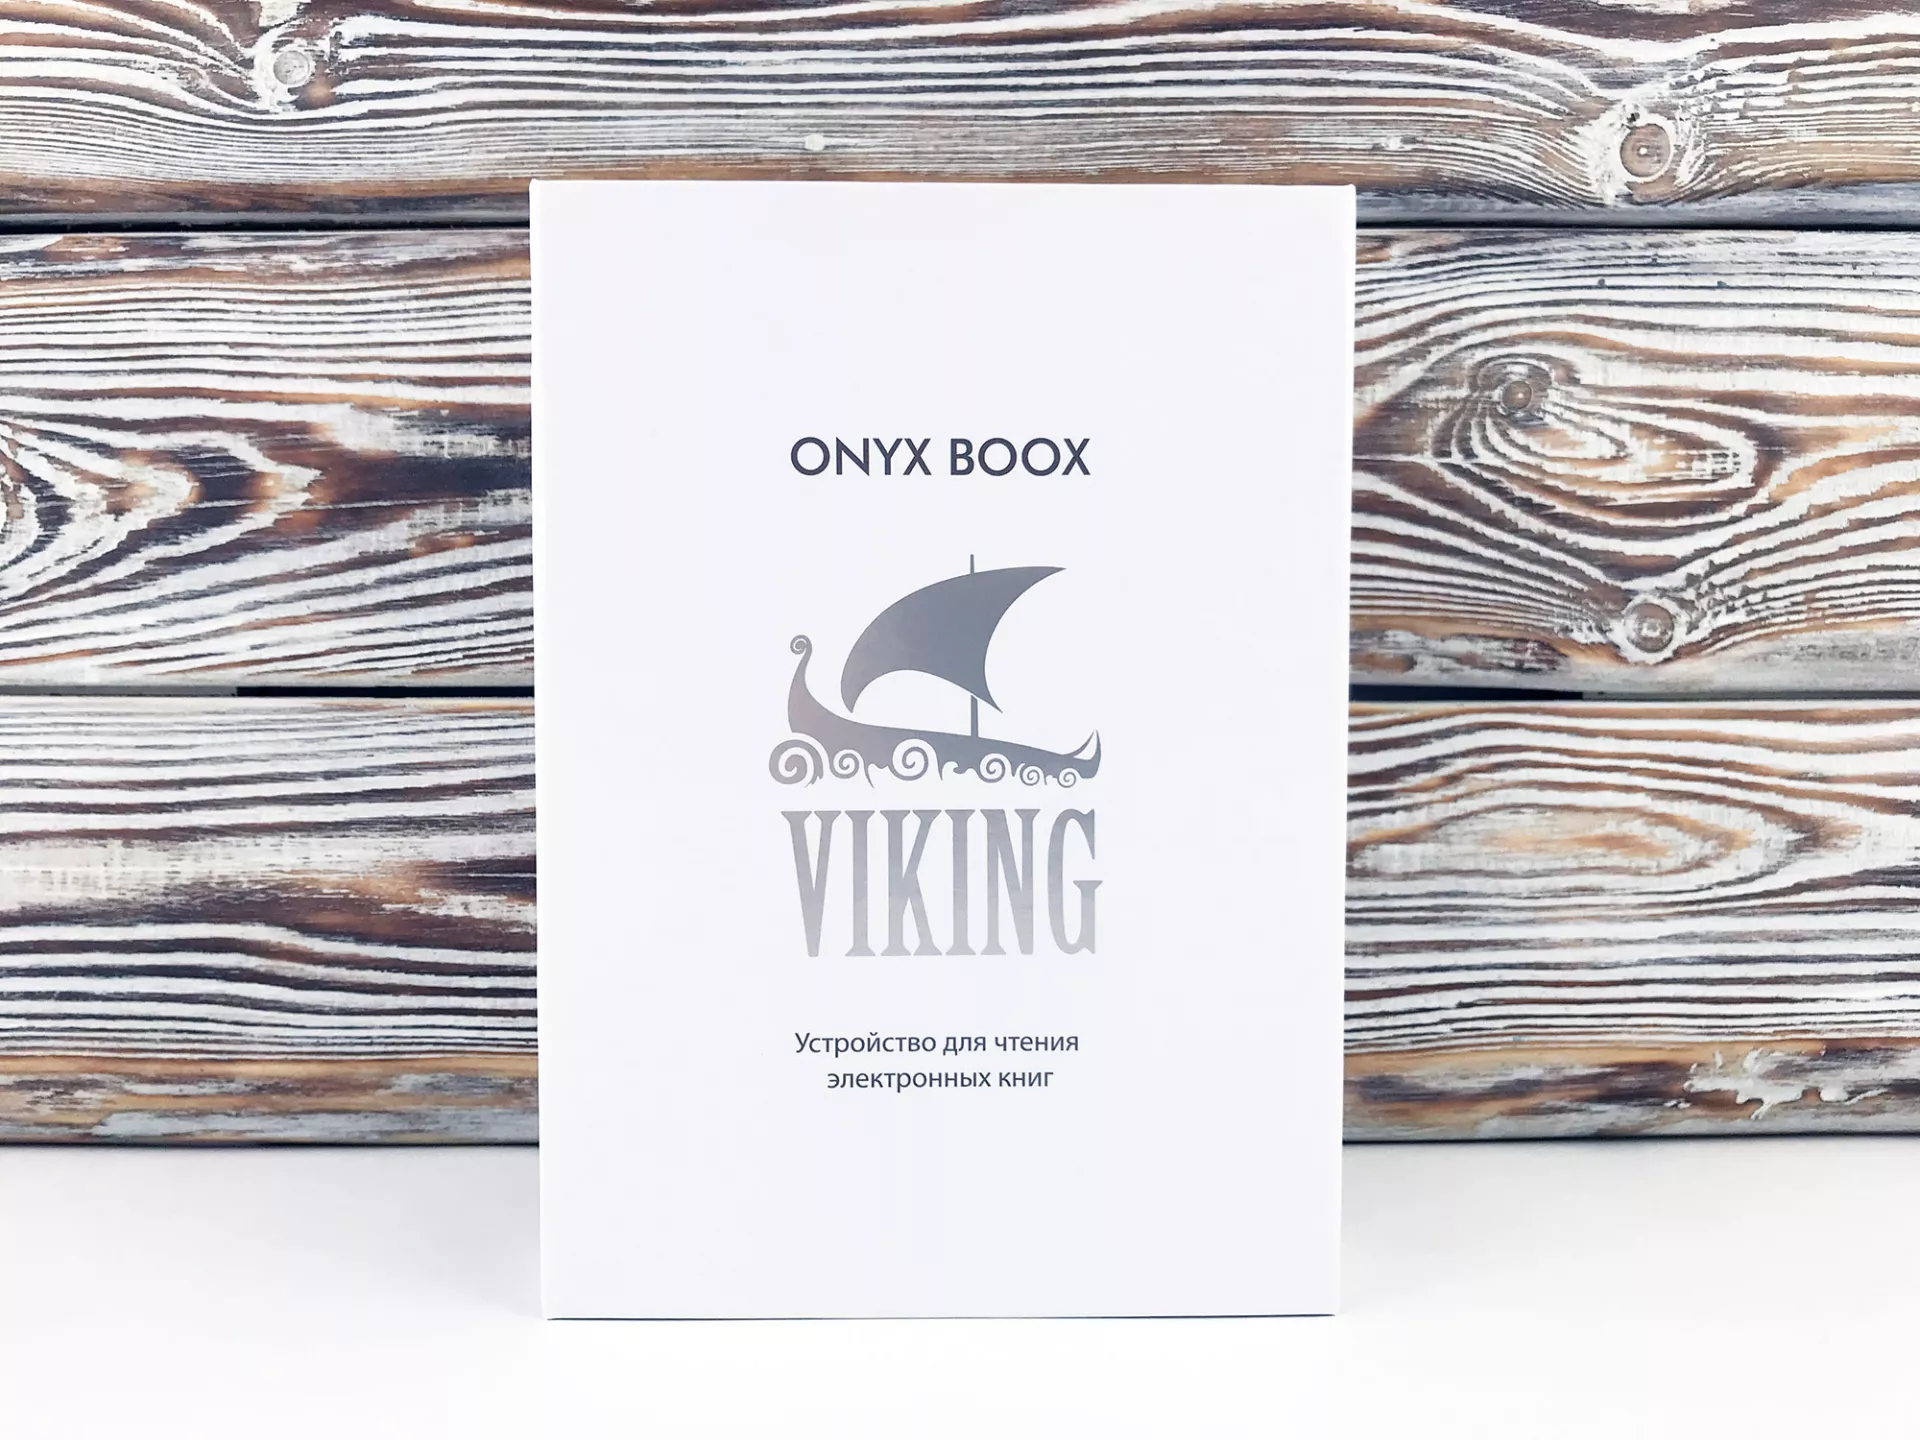 Обзор электронной книги ONYX BOOX Viking